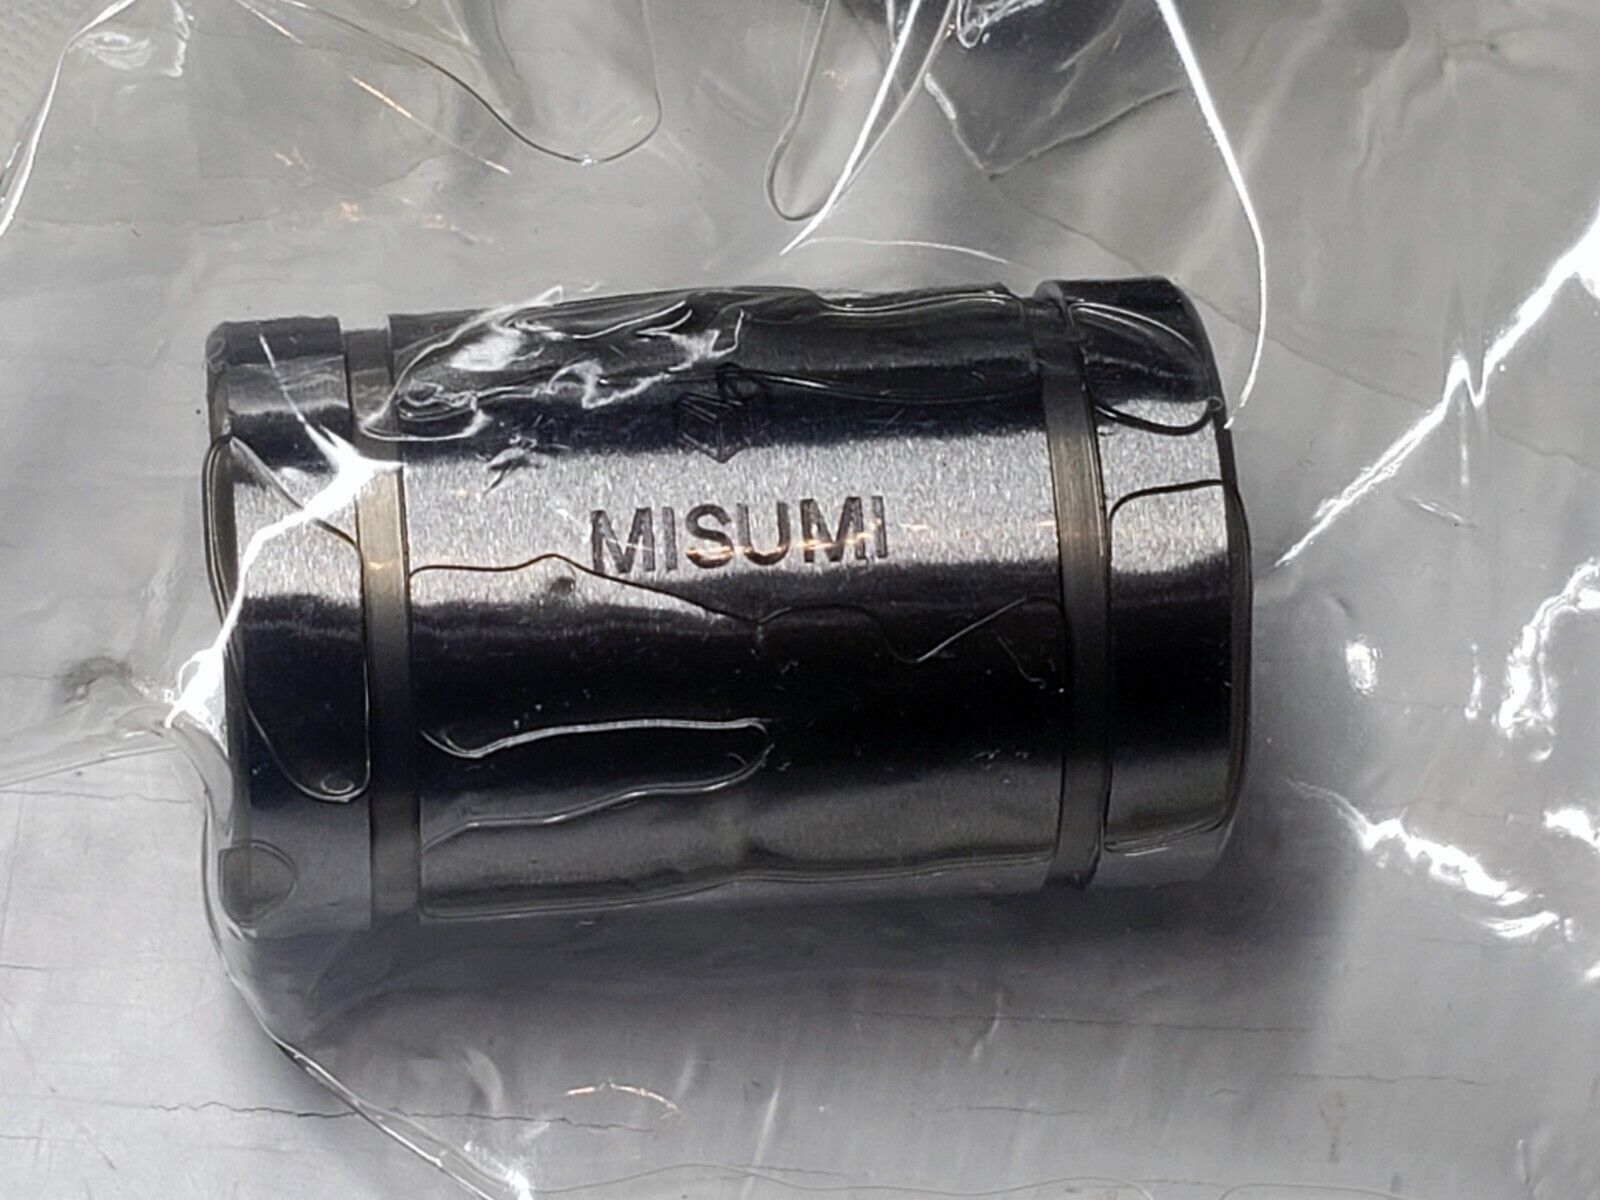 Rare Original Prusa 3D Printer Misumi (High Quality) Linear Bearings (6 total)